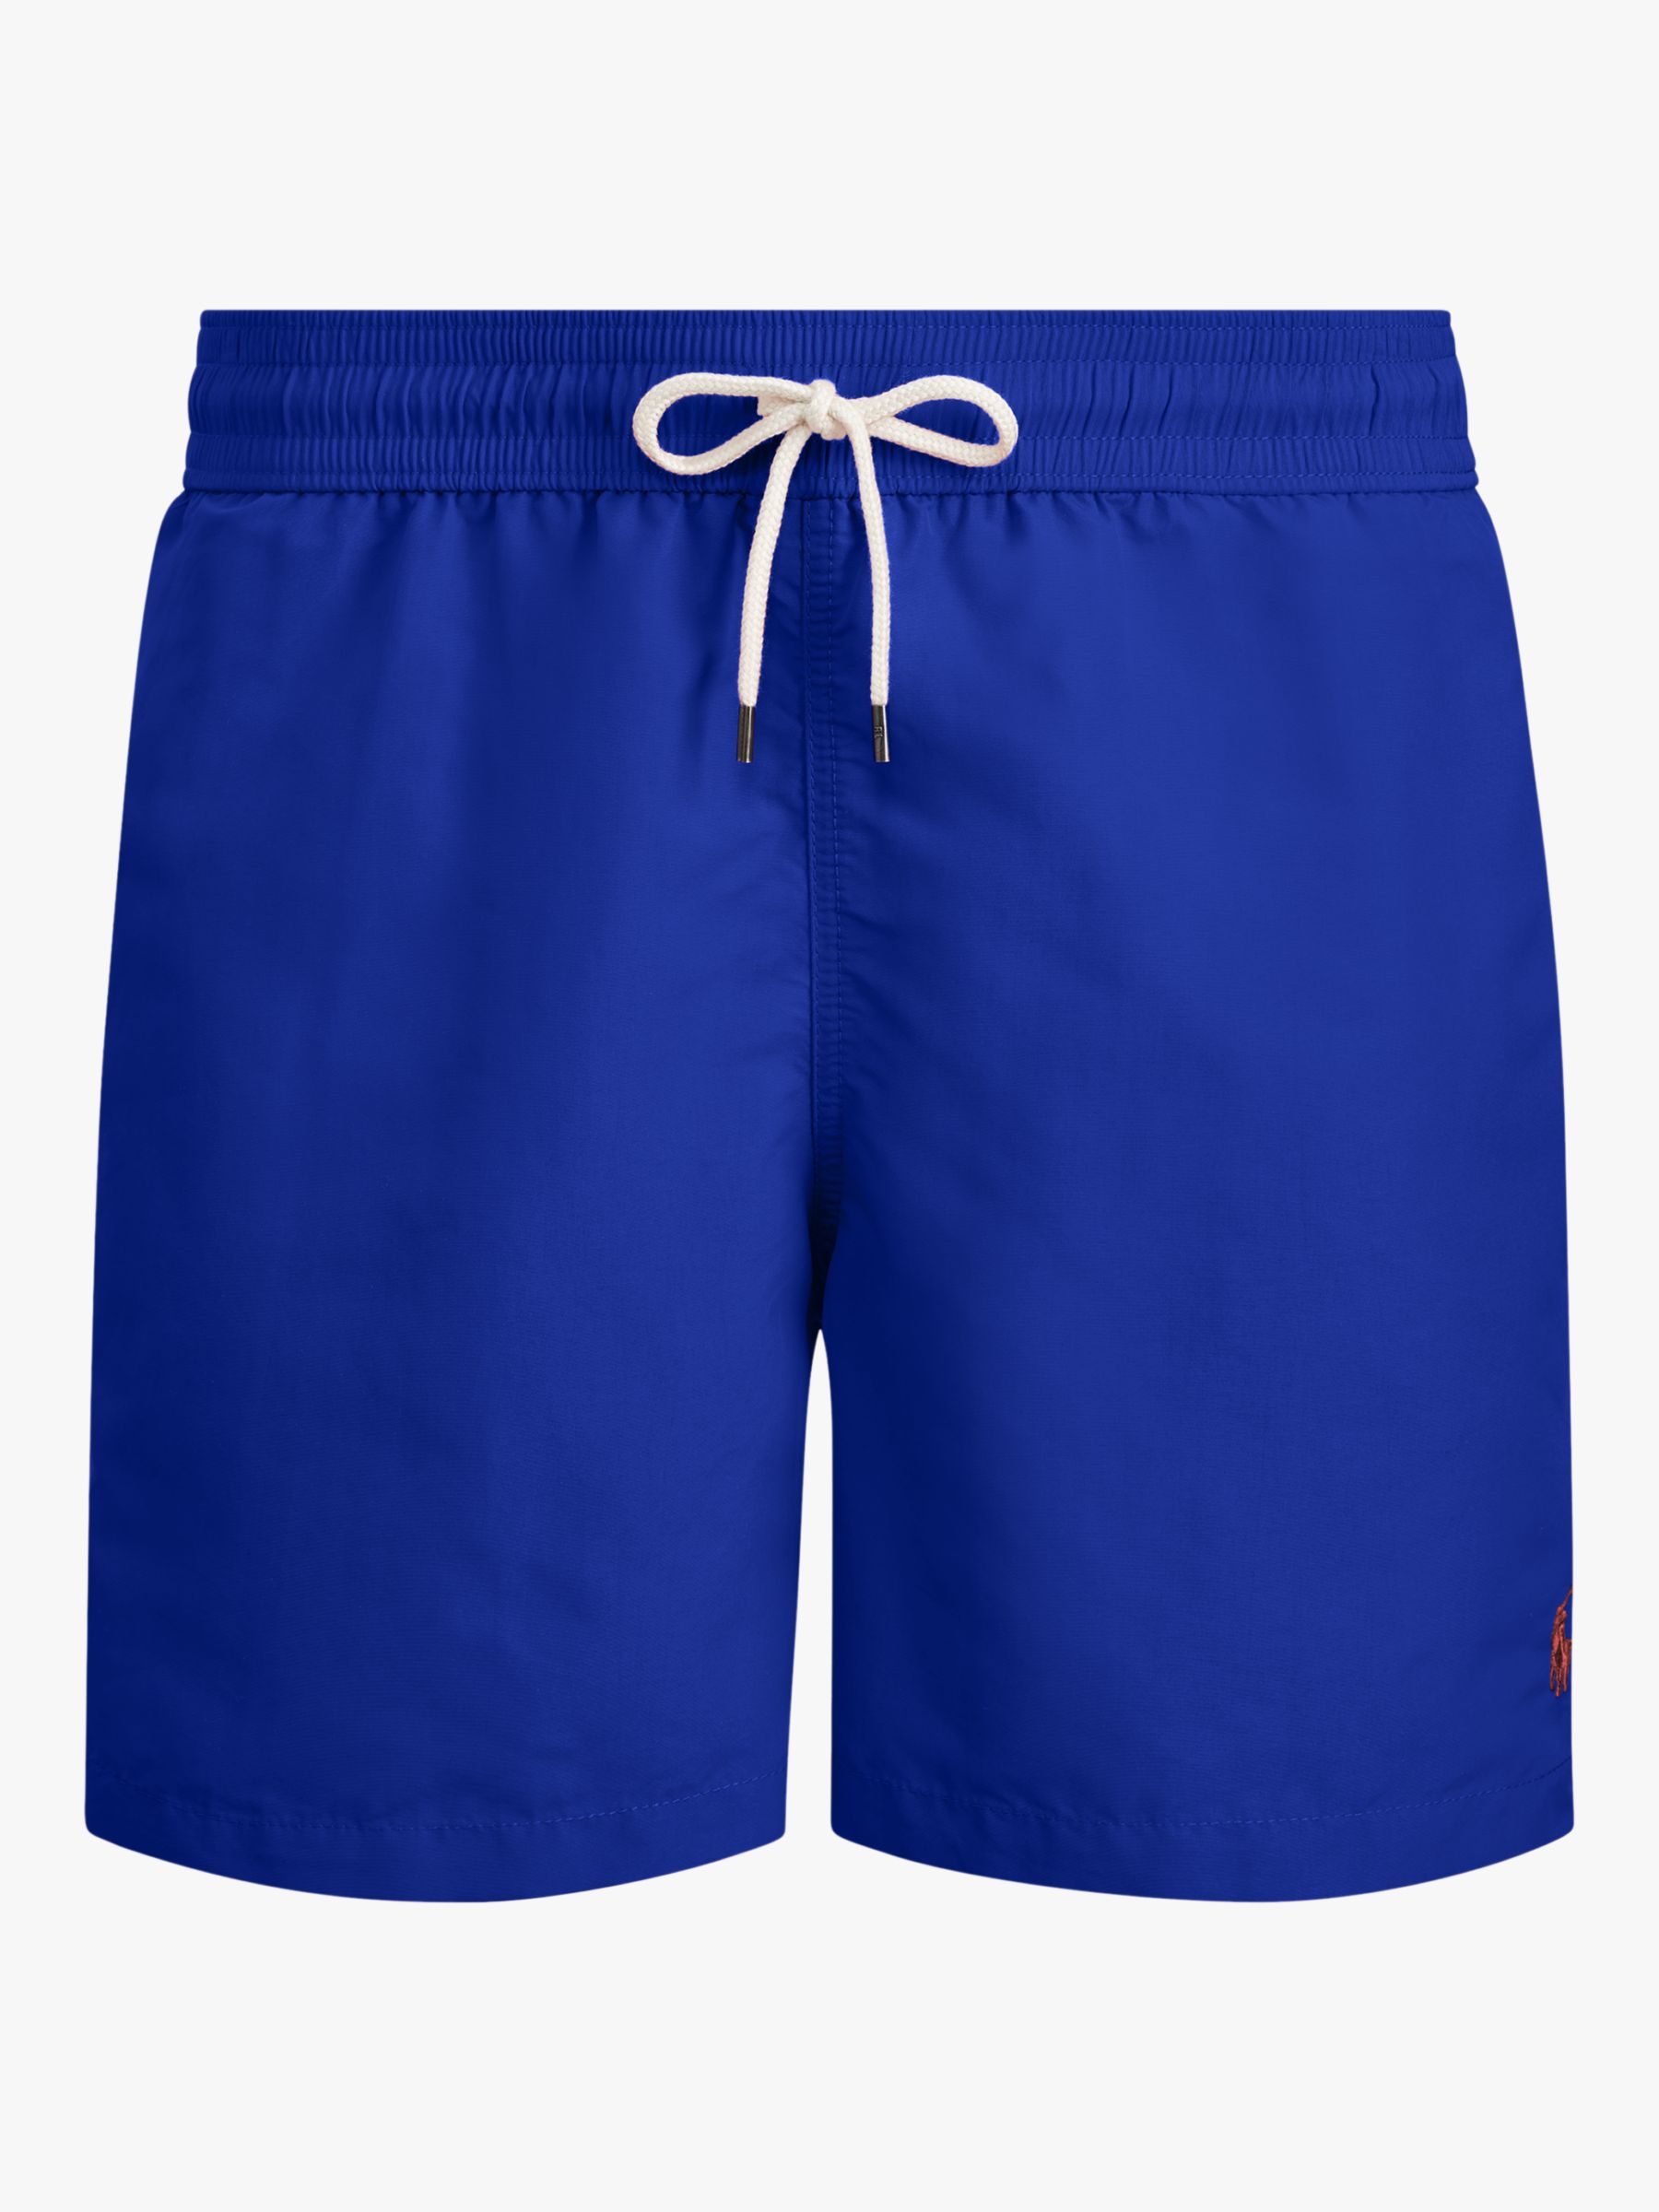 Polo Ralph Lauren Traveller Swim Shorts, Mid Blue, S